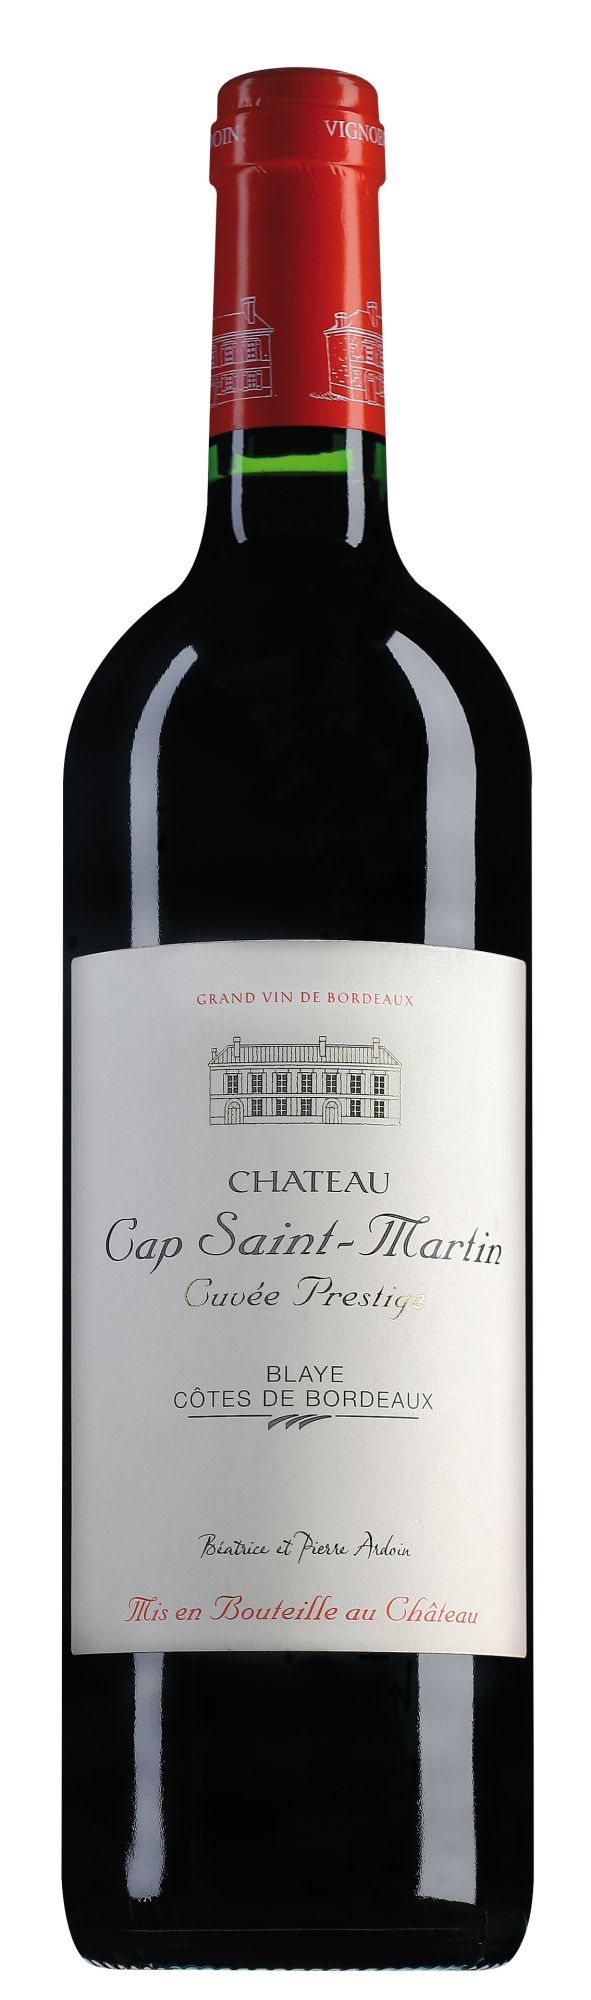 Château Cap Saint-Martin Blaye Côtes de Bordeaux Cuvée Prestige bij 6 flessen in originele kist